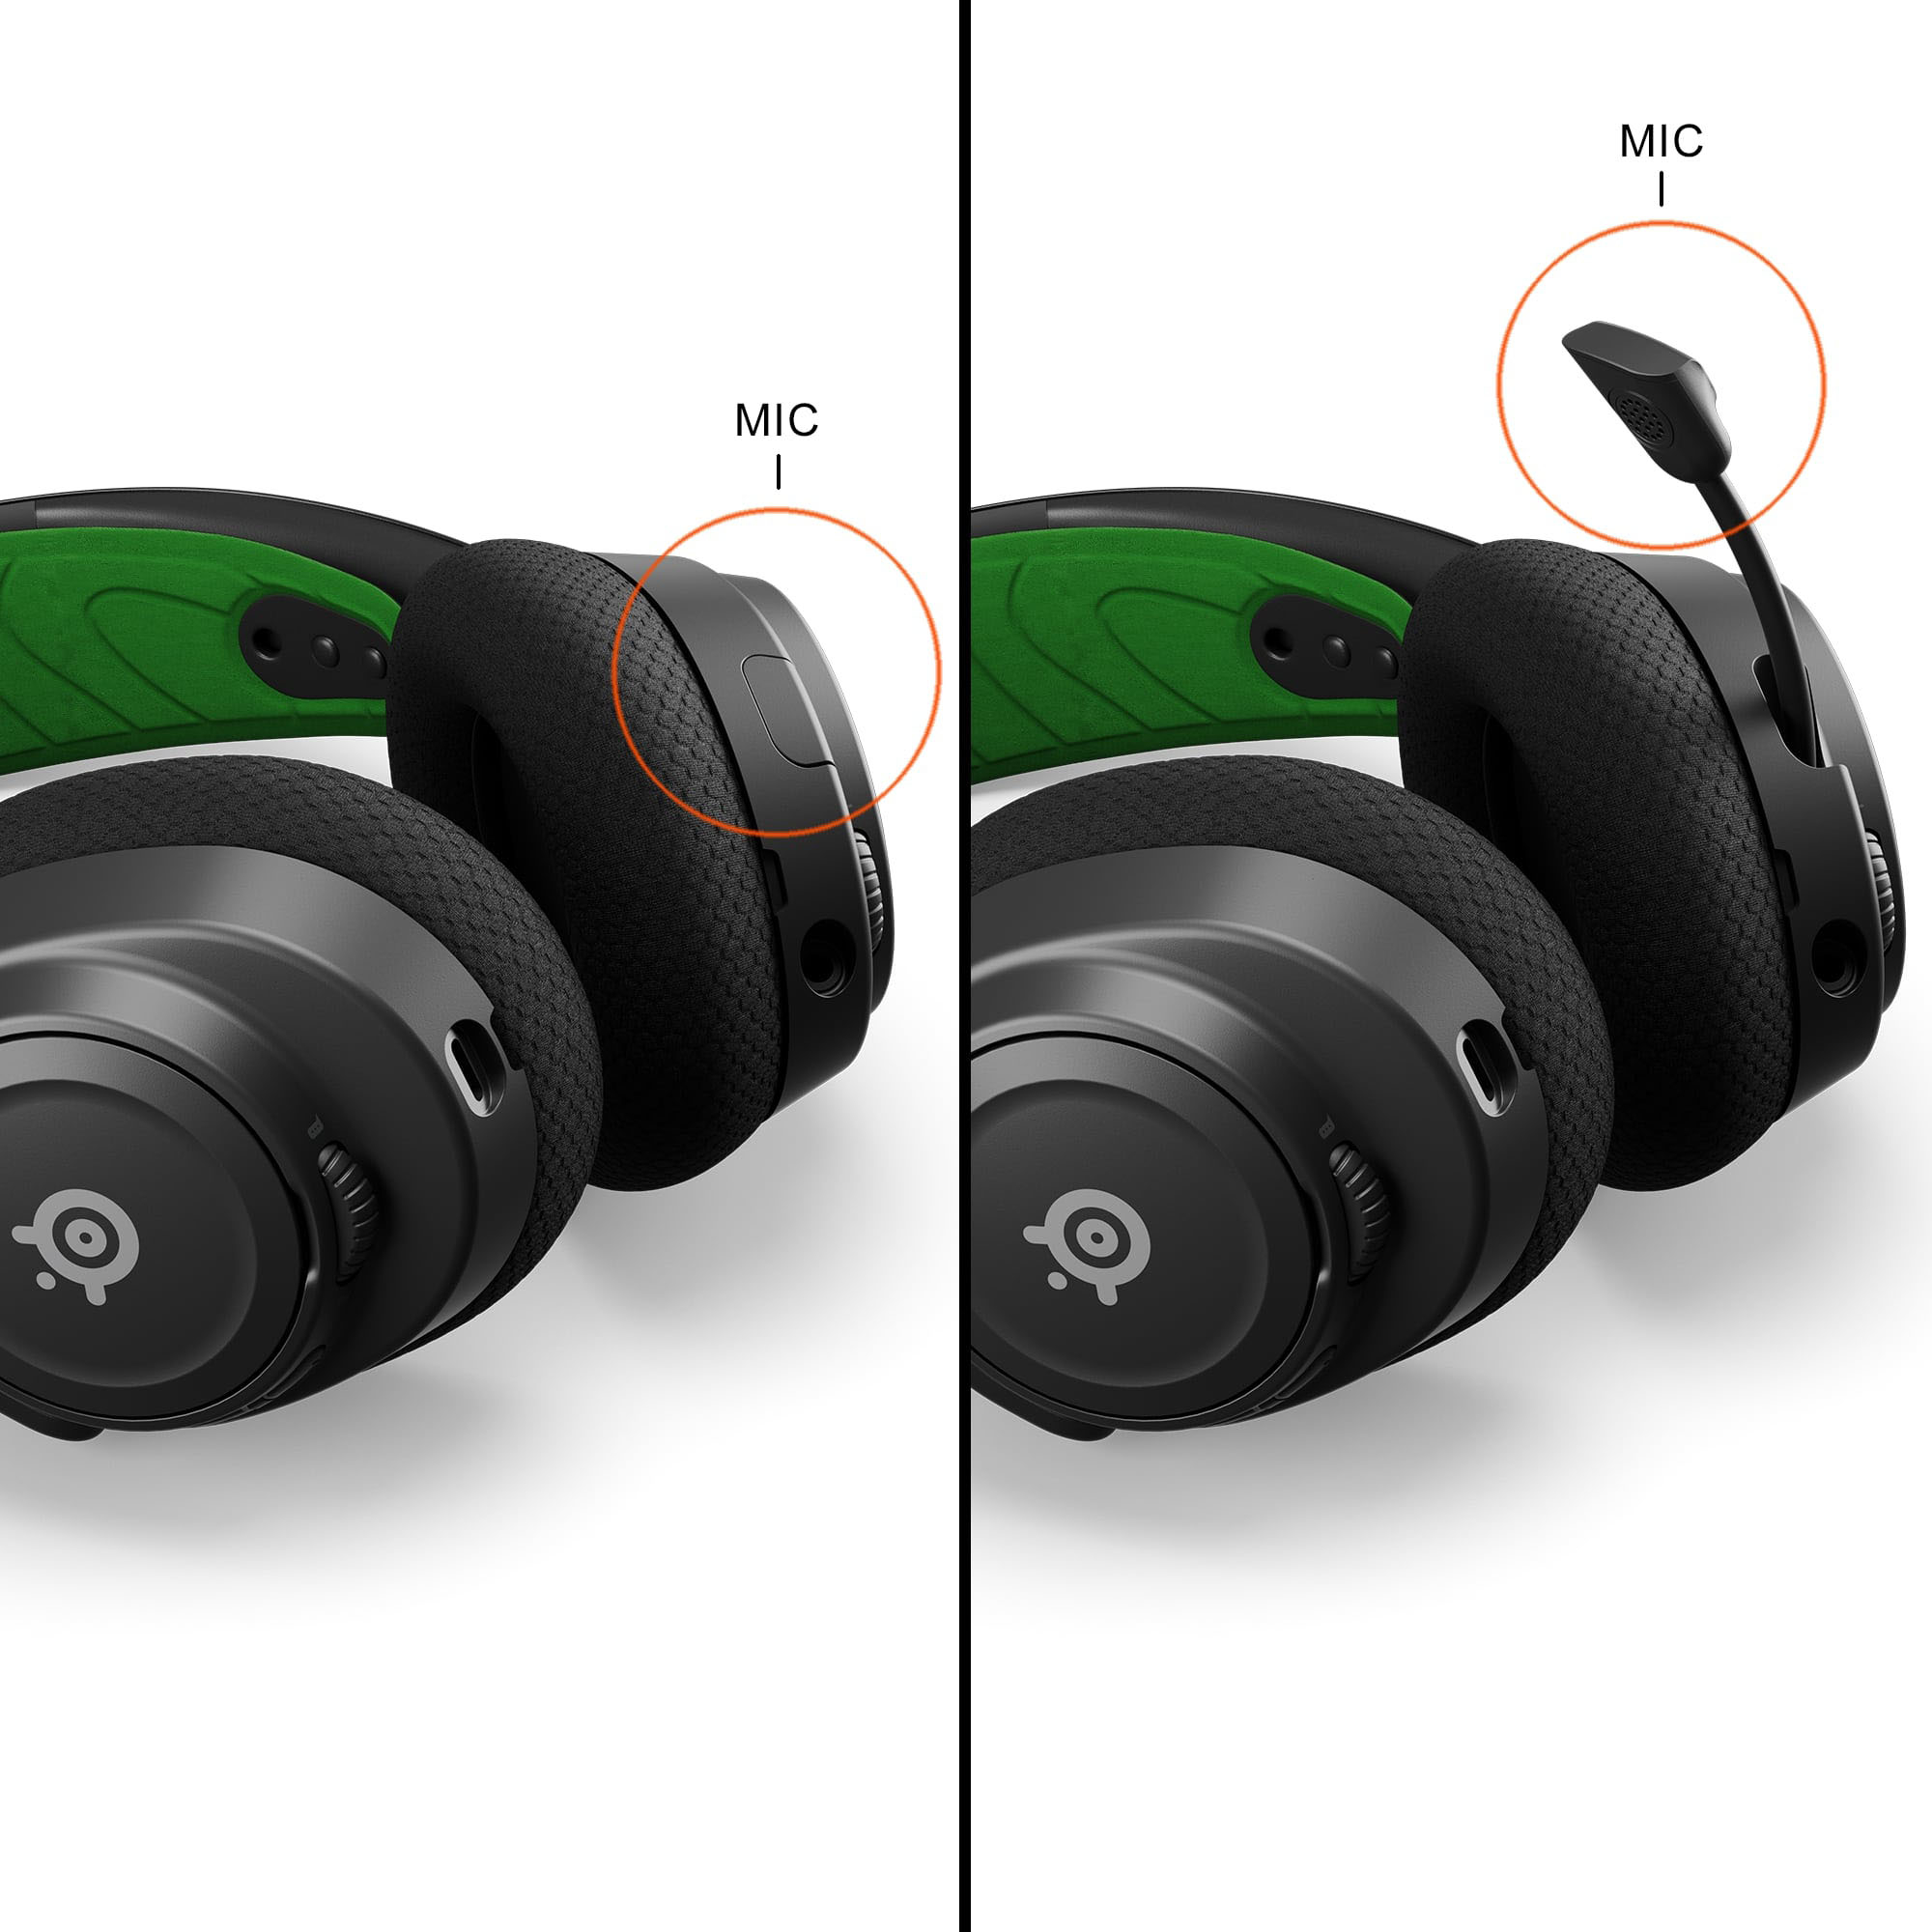 Steelseries Arctis 7x Wireless Gaming Headset plandetransformacion ...